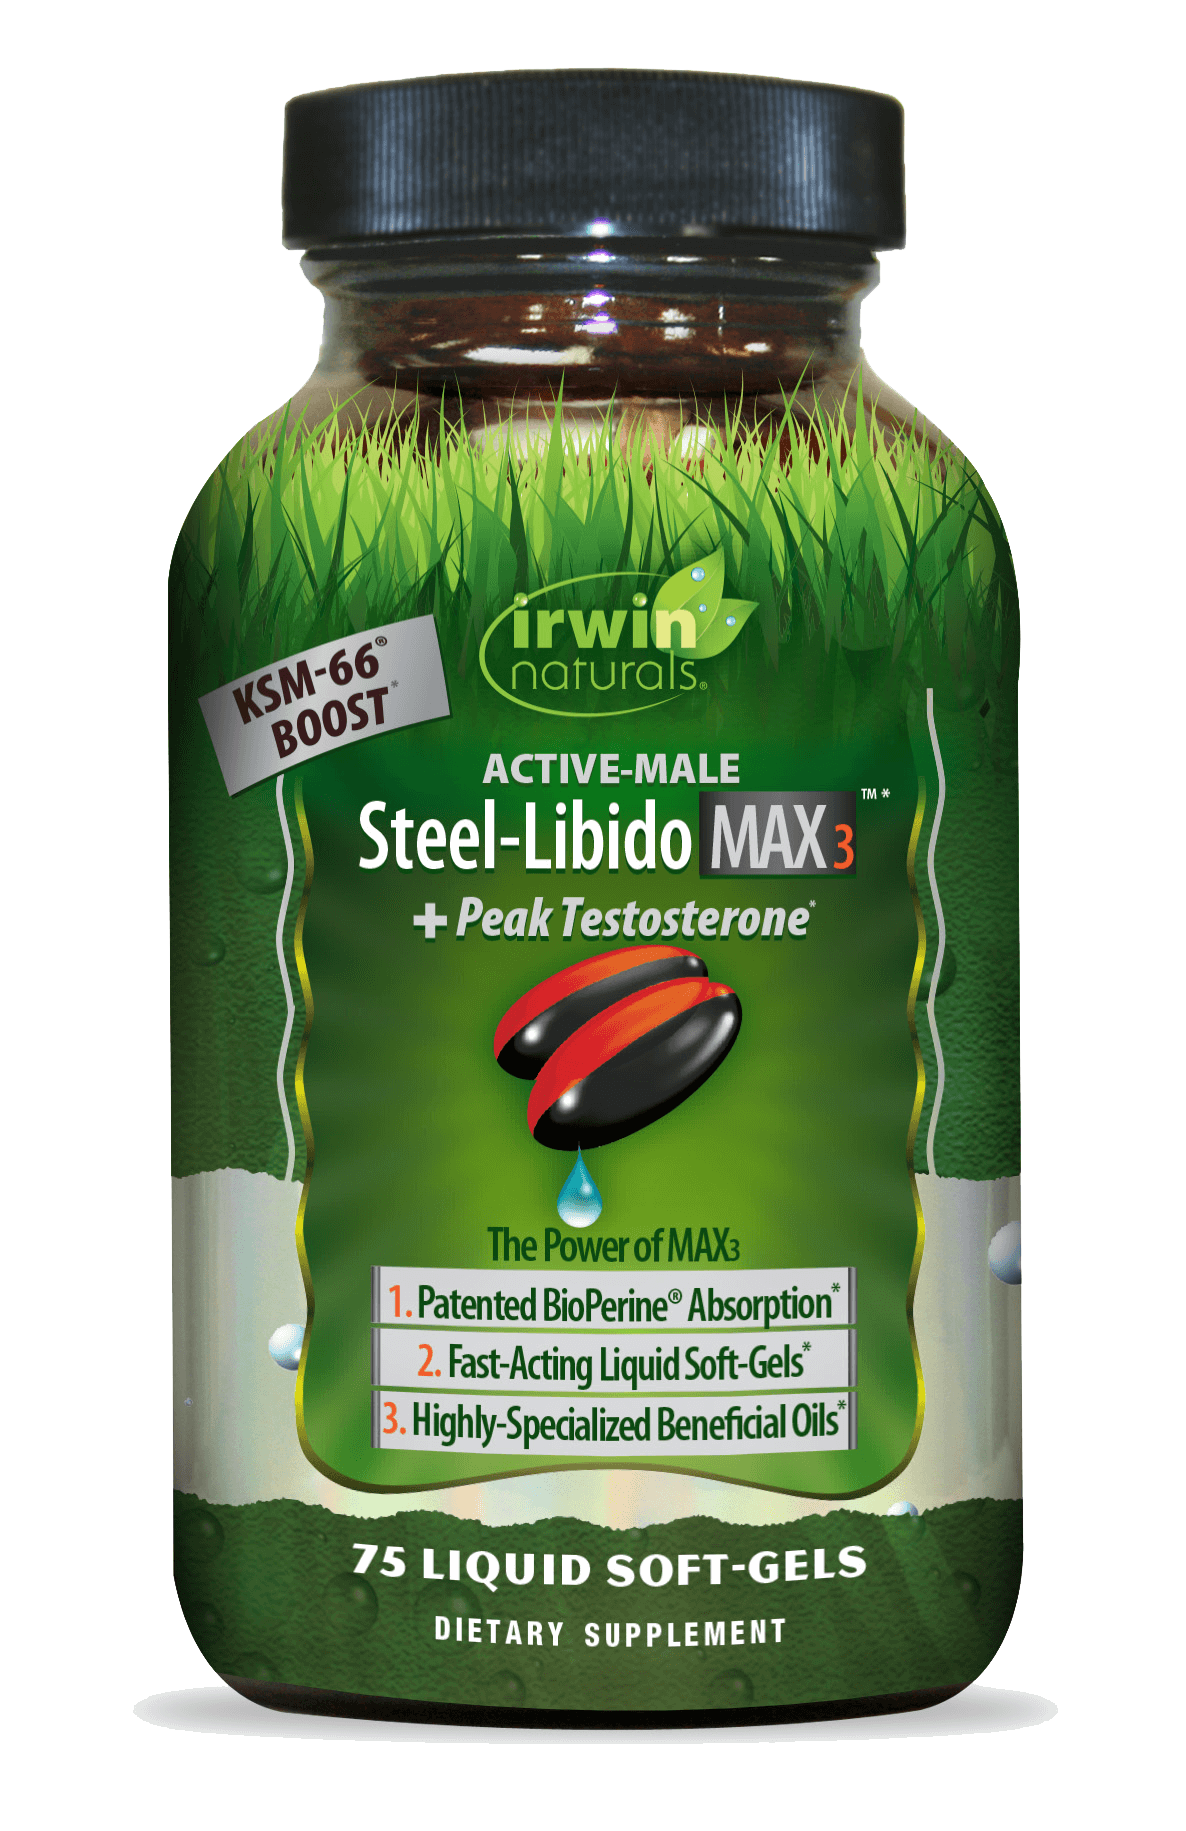 Active Male Steel Libido Max 3 Plus Peak Testosterone by Irwin Naturals